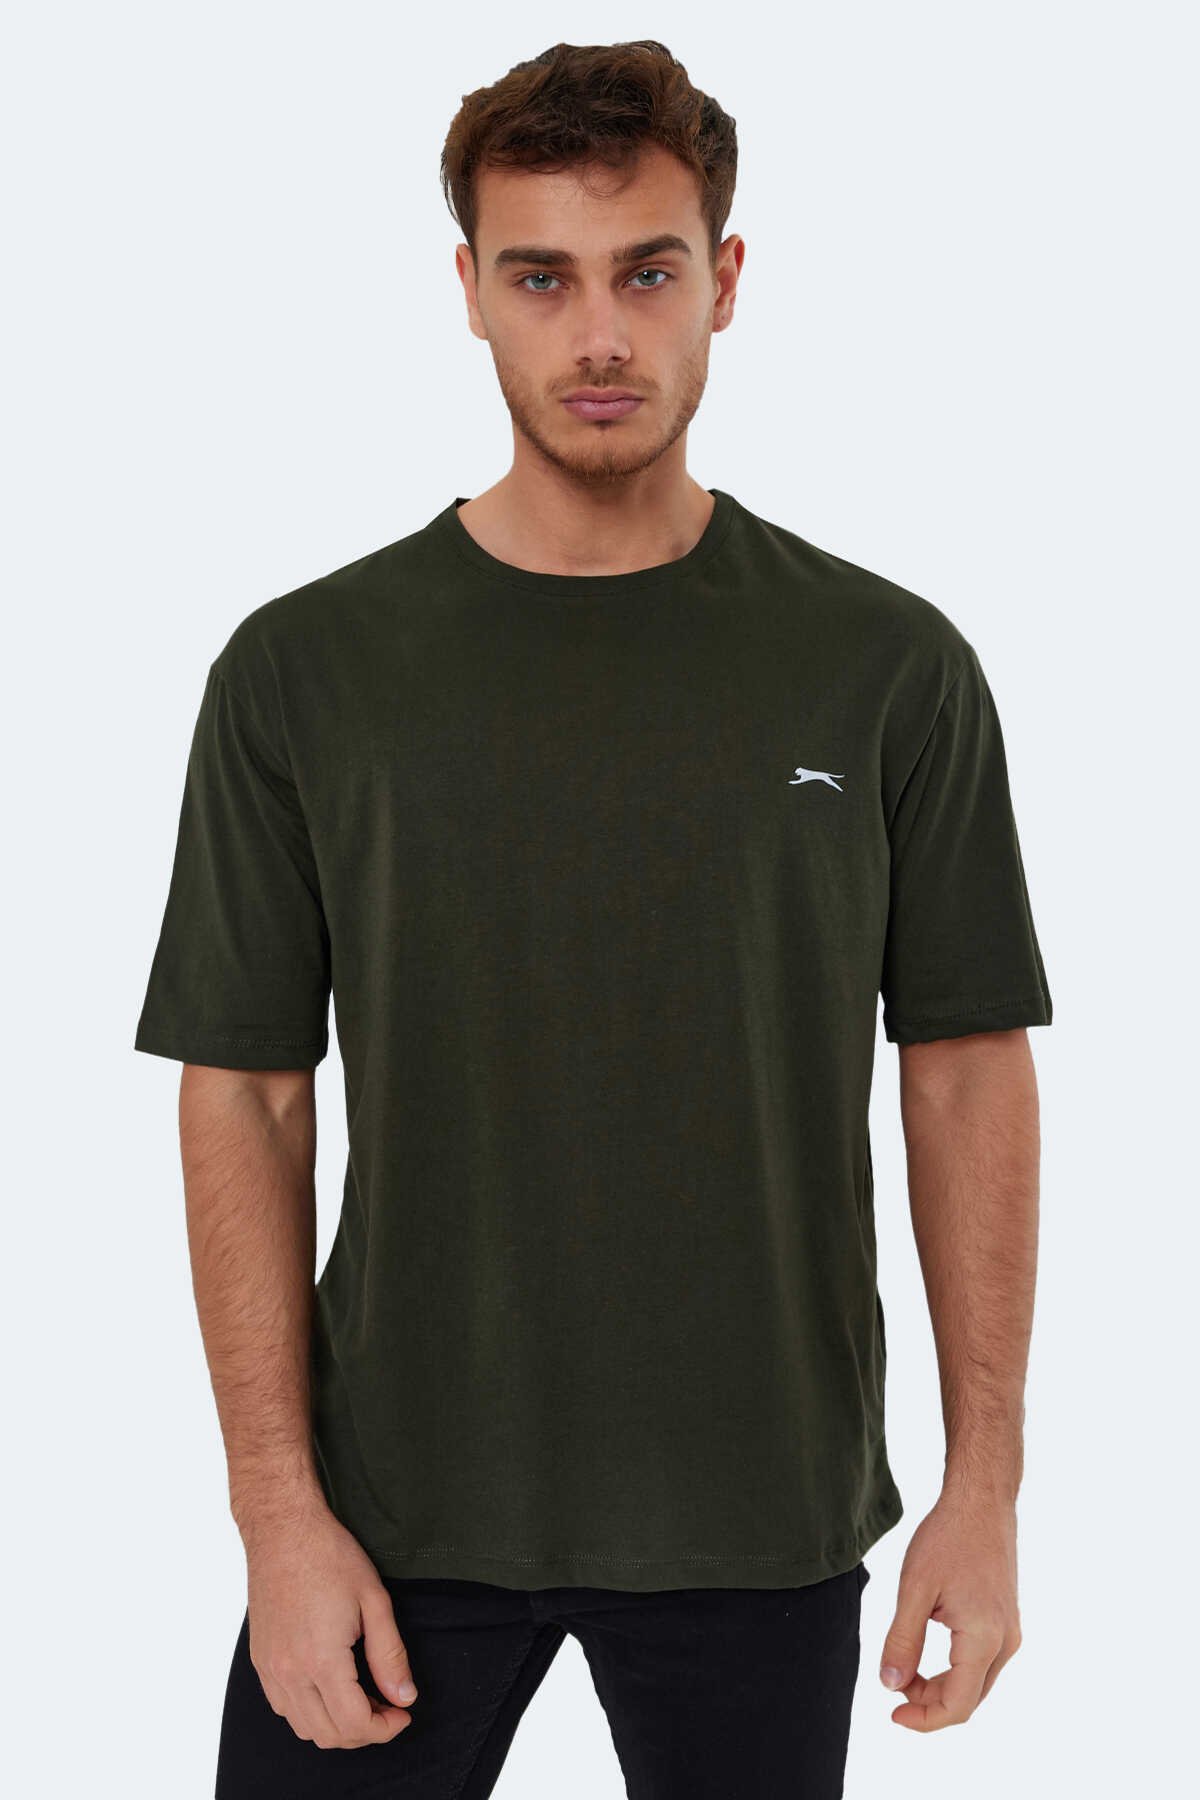 Slazenger - Slazenger KAISER Erkek Kısa Kol T-Shirt Koyu Yeşil